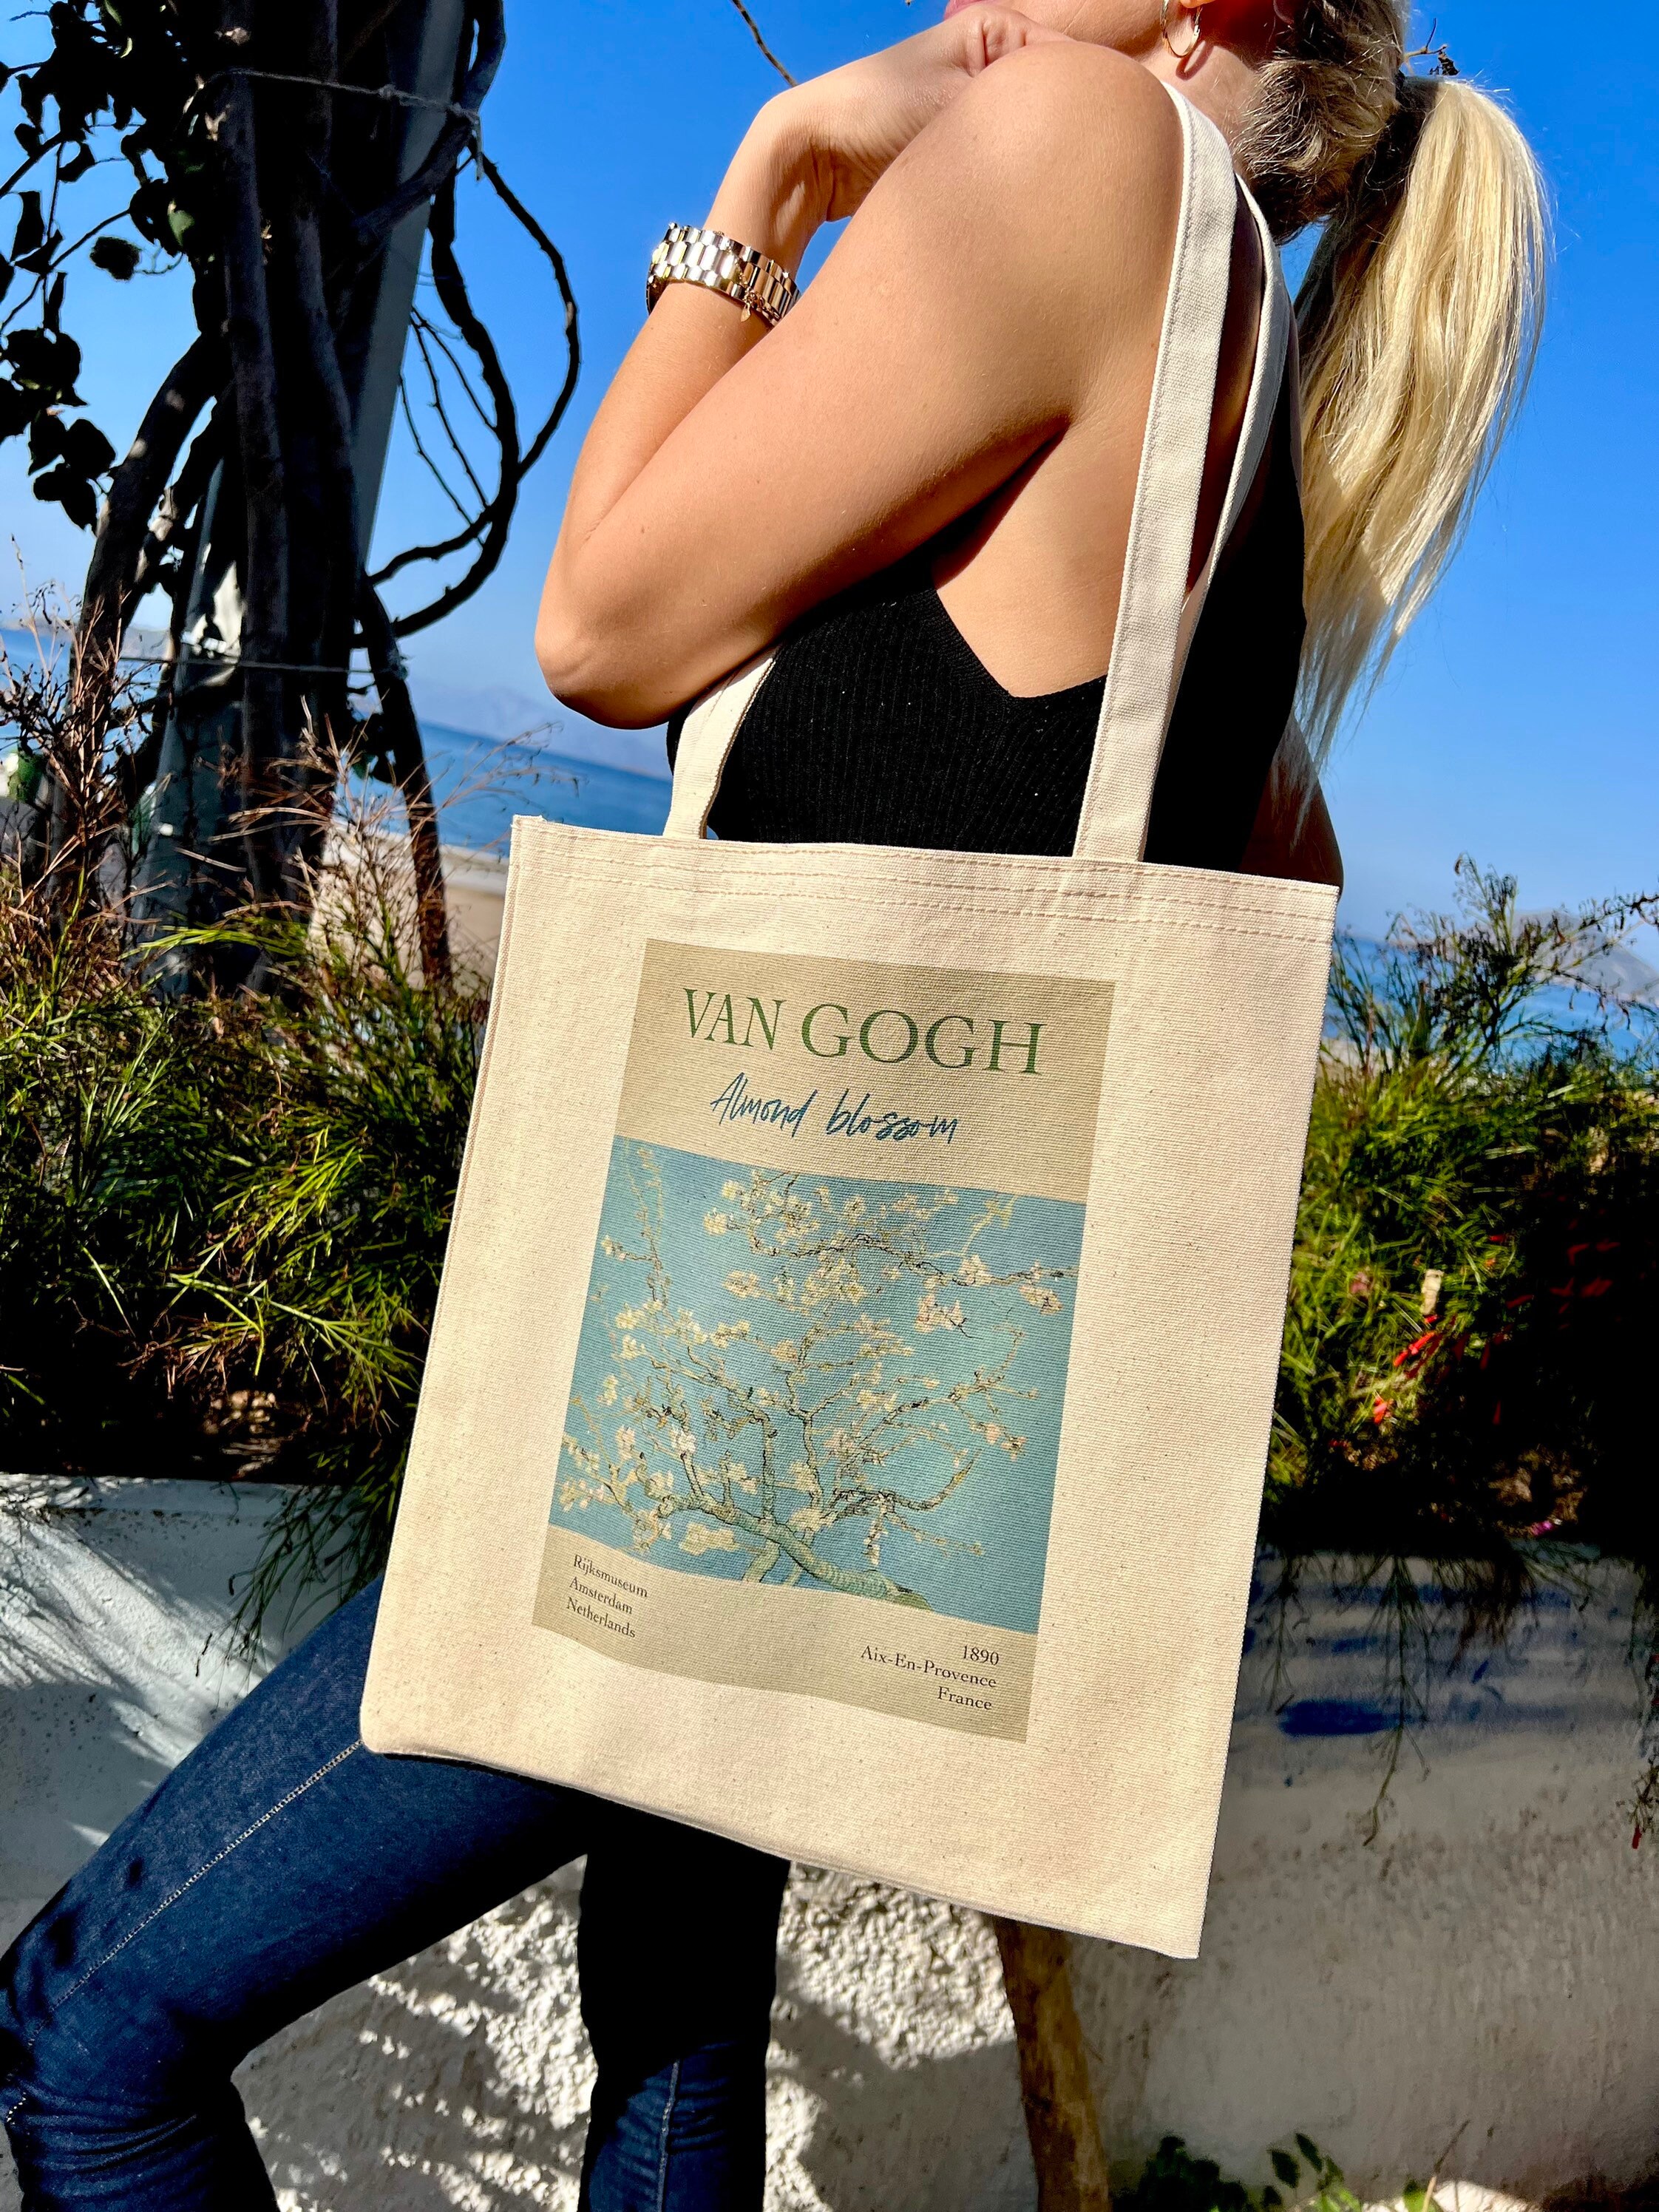 Tote Bag Almond Blossom Van Gogh Tote Bag Linen Bag Tote 